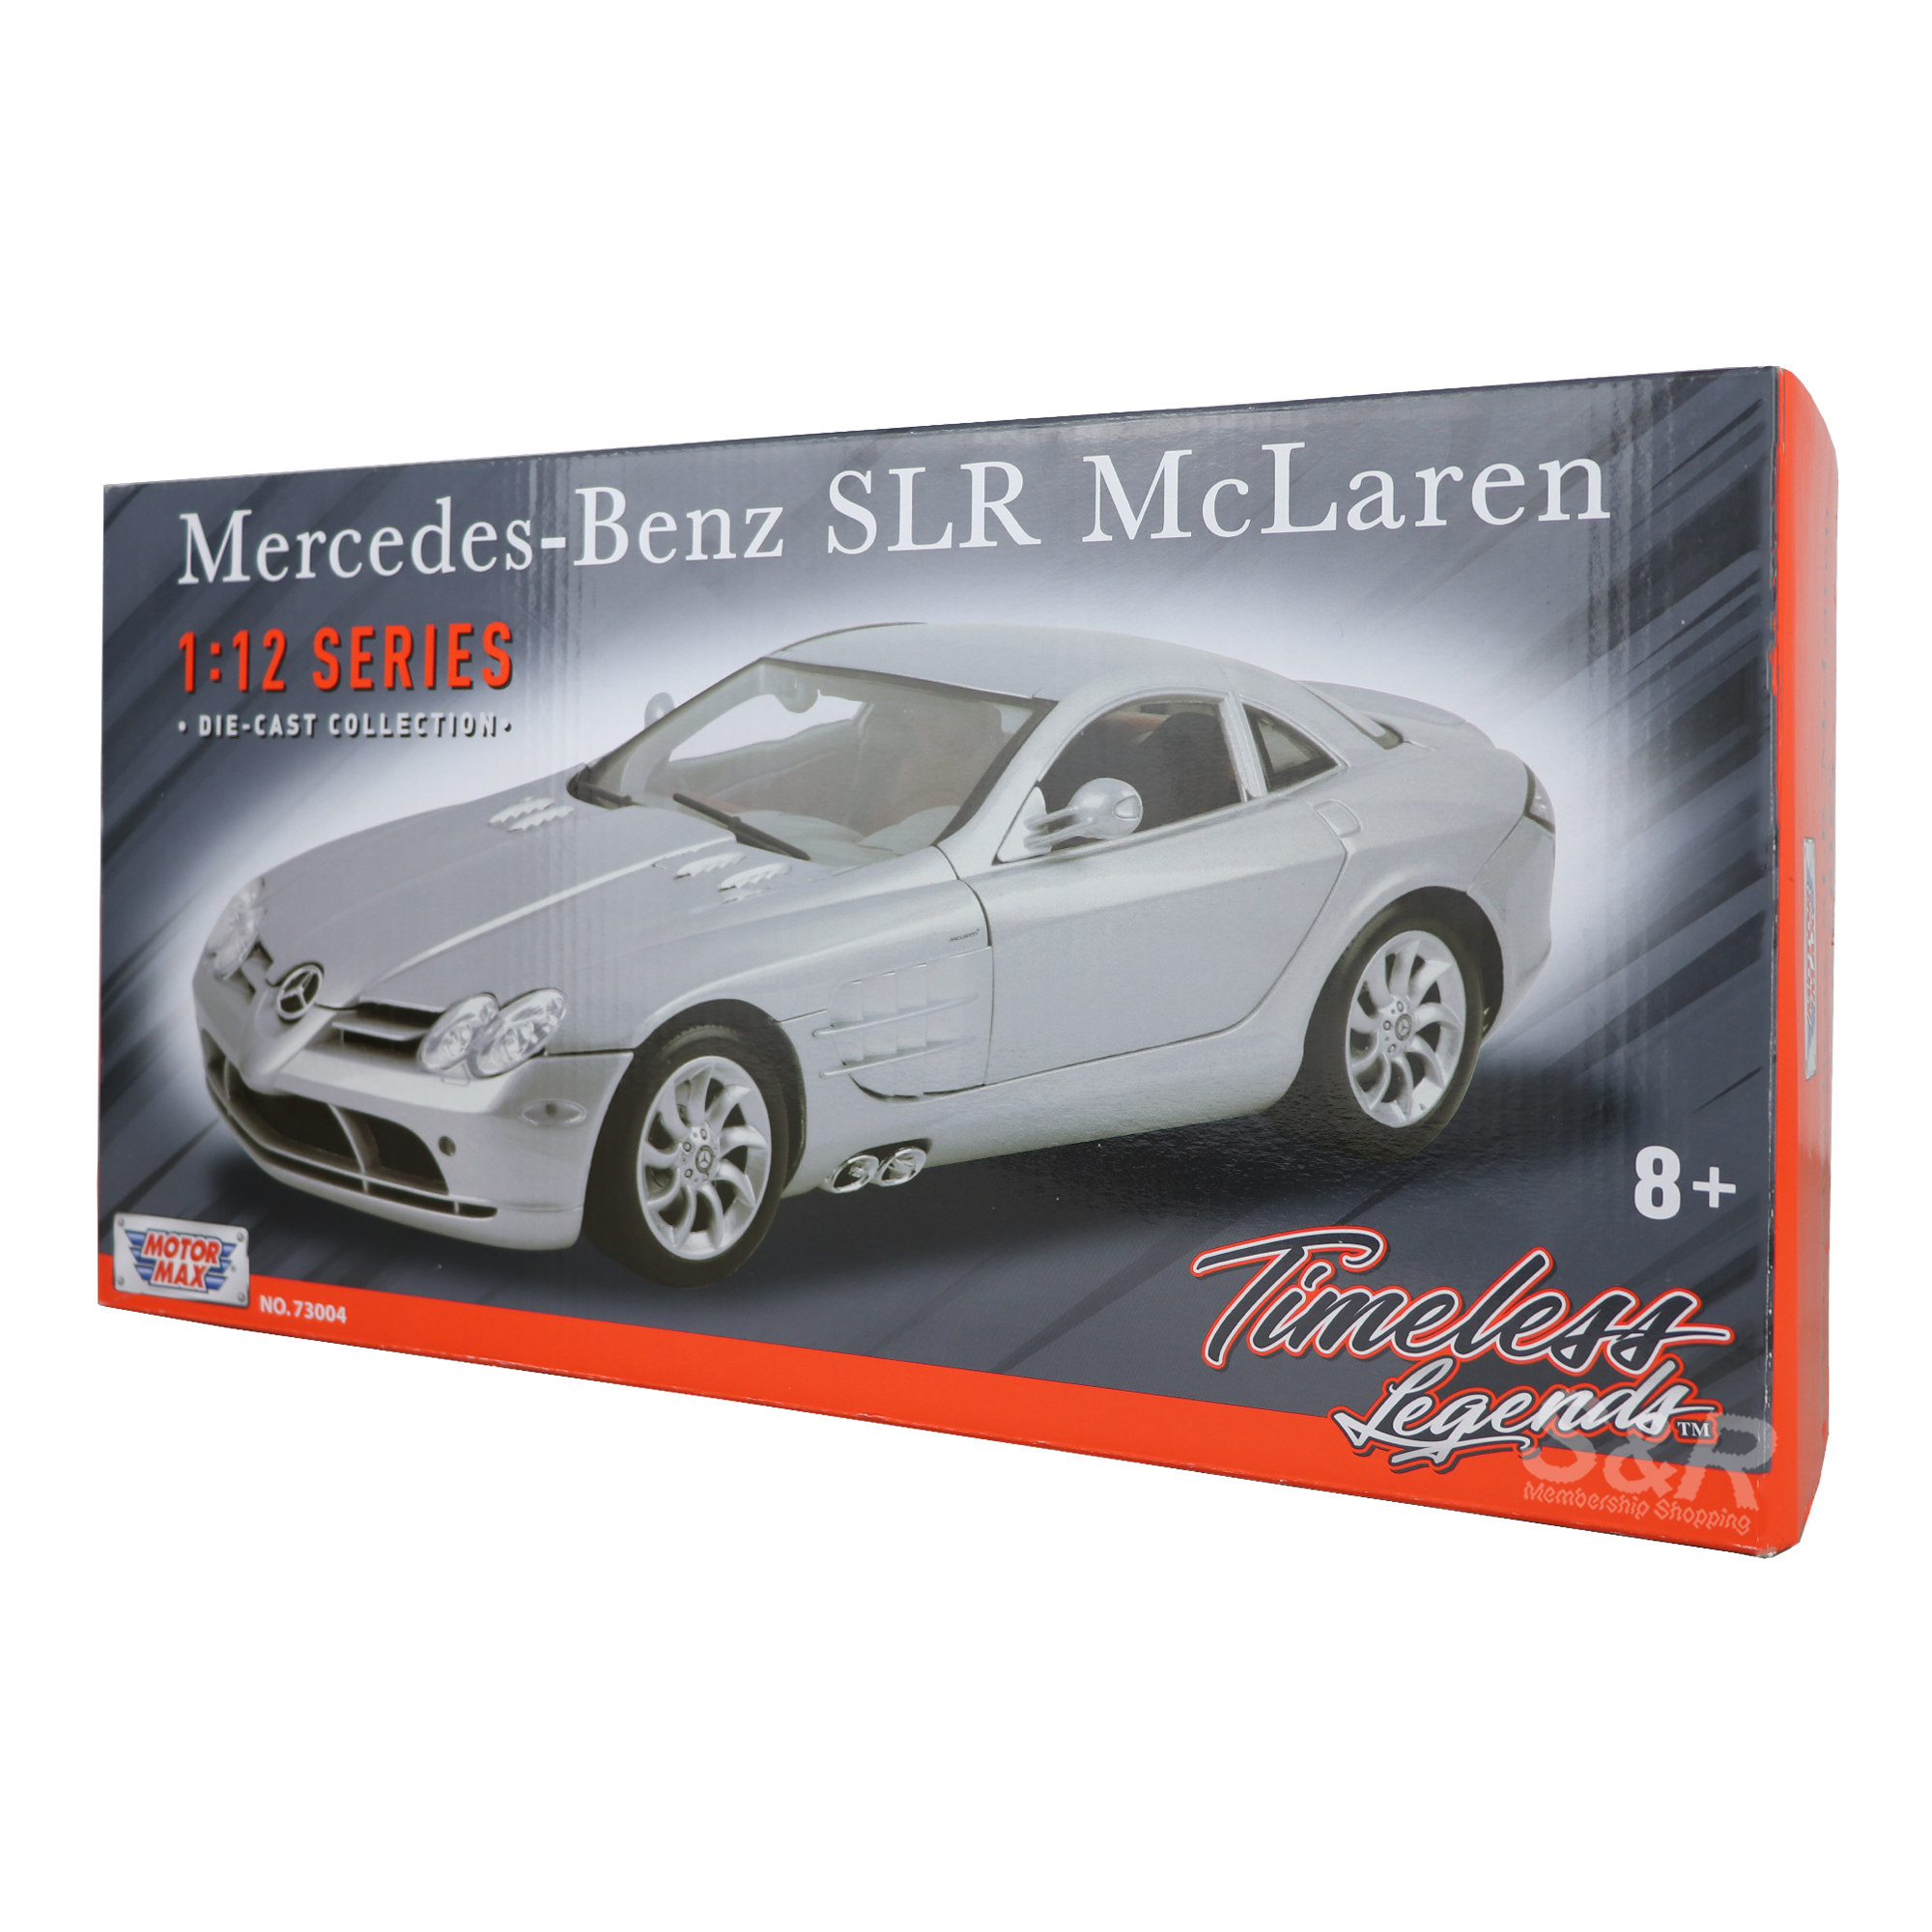 Motor Max Timeless Legends 1:12 Series Die-Cast Collection Mercedes-Benz SLR McLaren